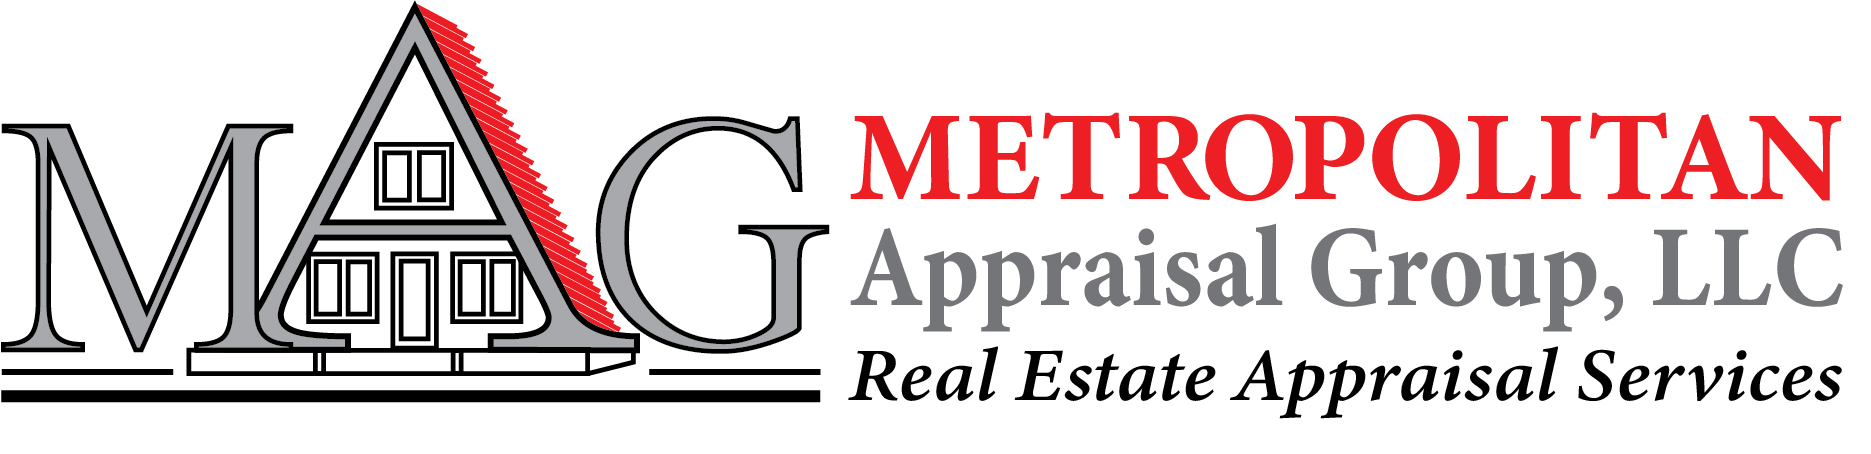 Metropolitan Appraisal Group, LLC